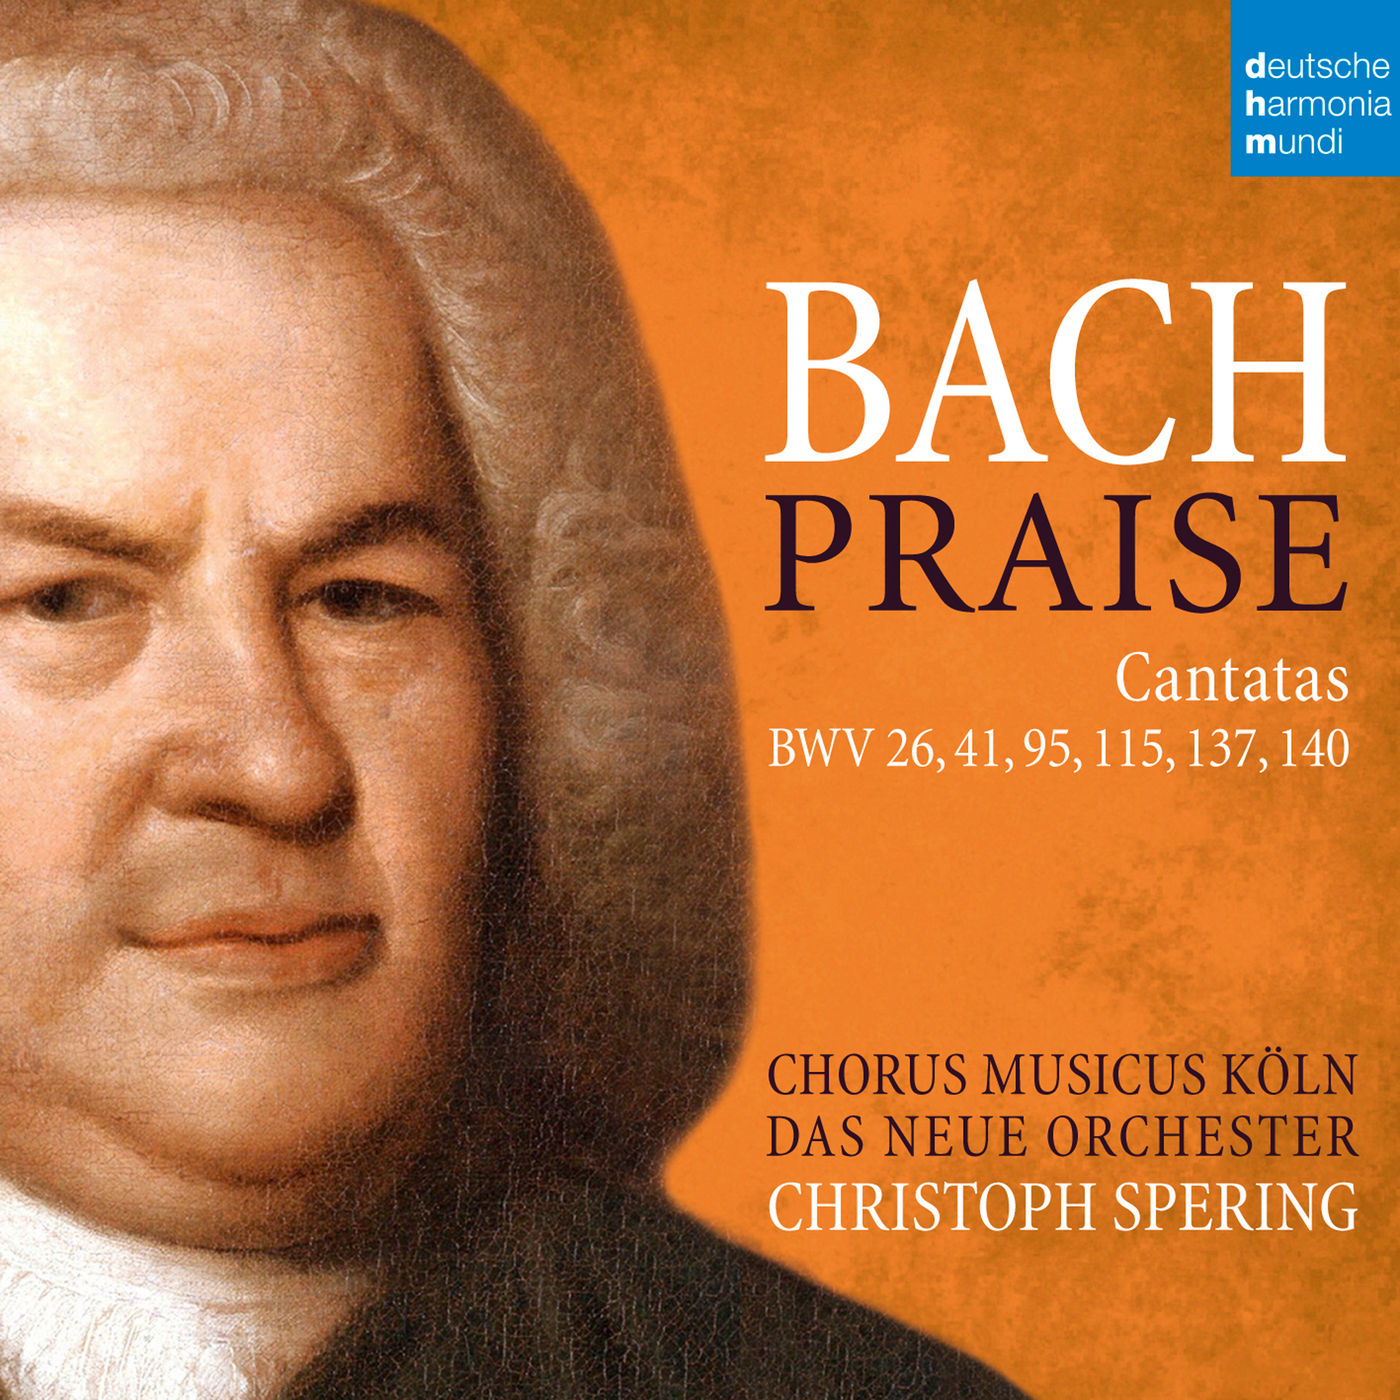 Christoph Spering - Bach: Praise - Cantatas BWV 26, 41, 95, 115, 137, 140 (2020) [FLAC 24bit/48kHz]